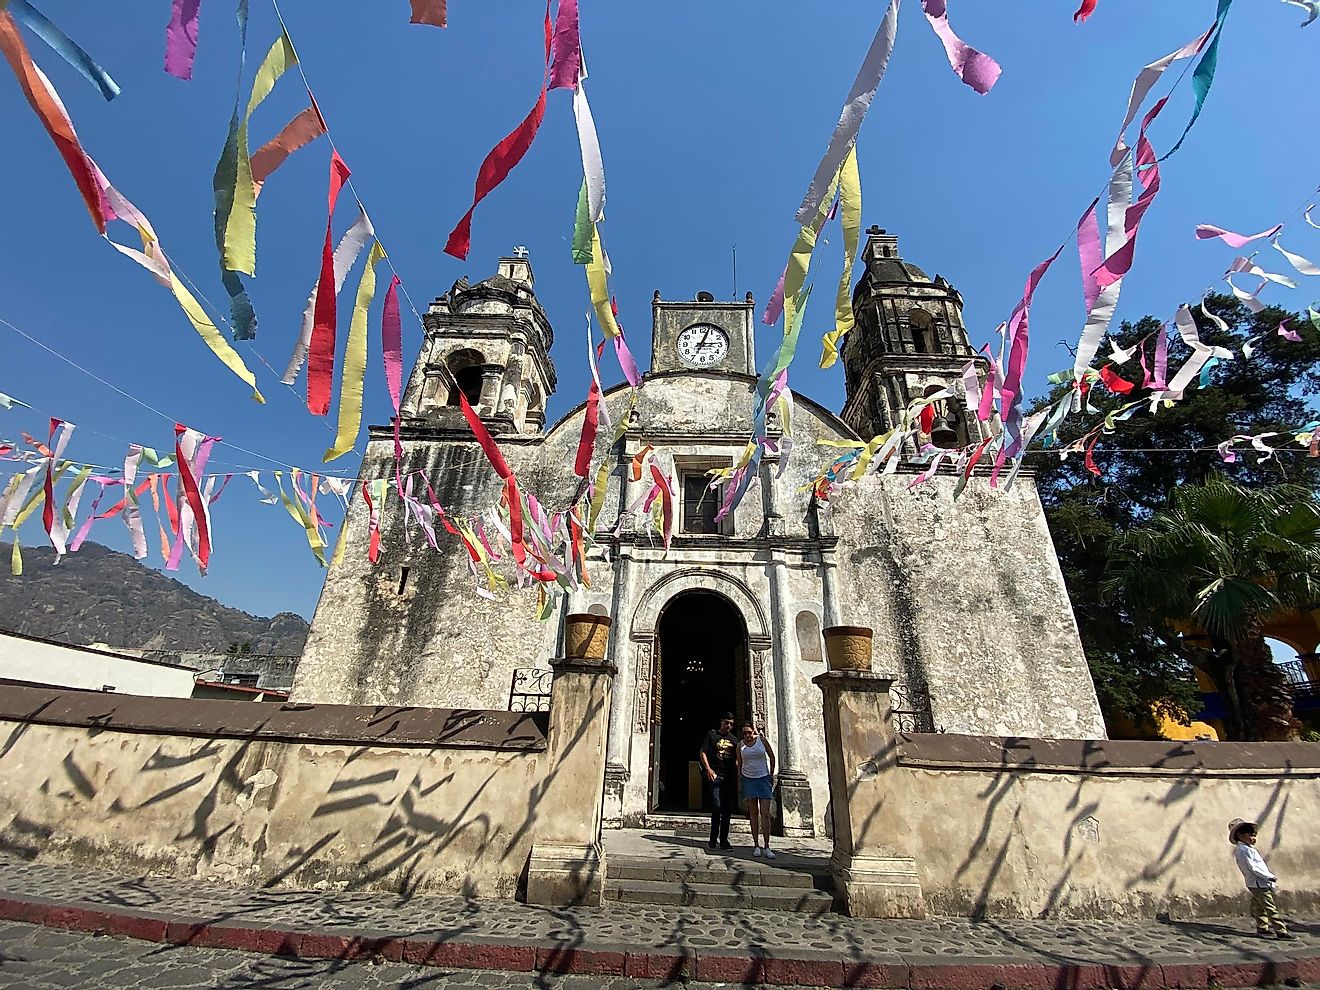 Tepozltan, Morelos, Mexico 03/01/2020 Magic town of Tepoztlan, parish of our lady of Nativity church, built by indigenous people. Image credit: FERNANDO MACIAS ROMO / Shutterstock.com